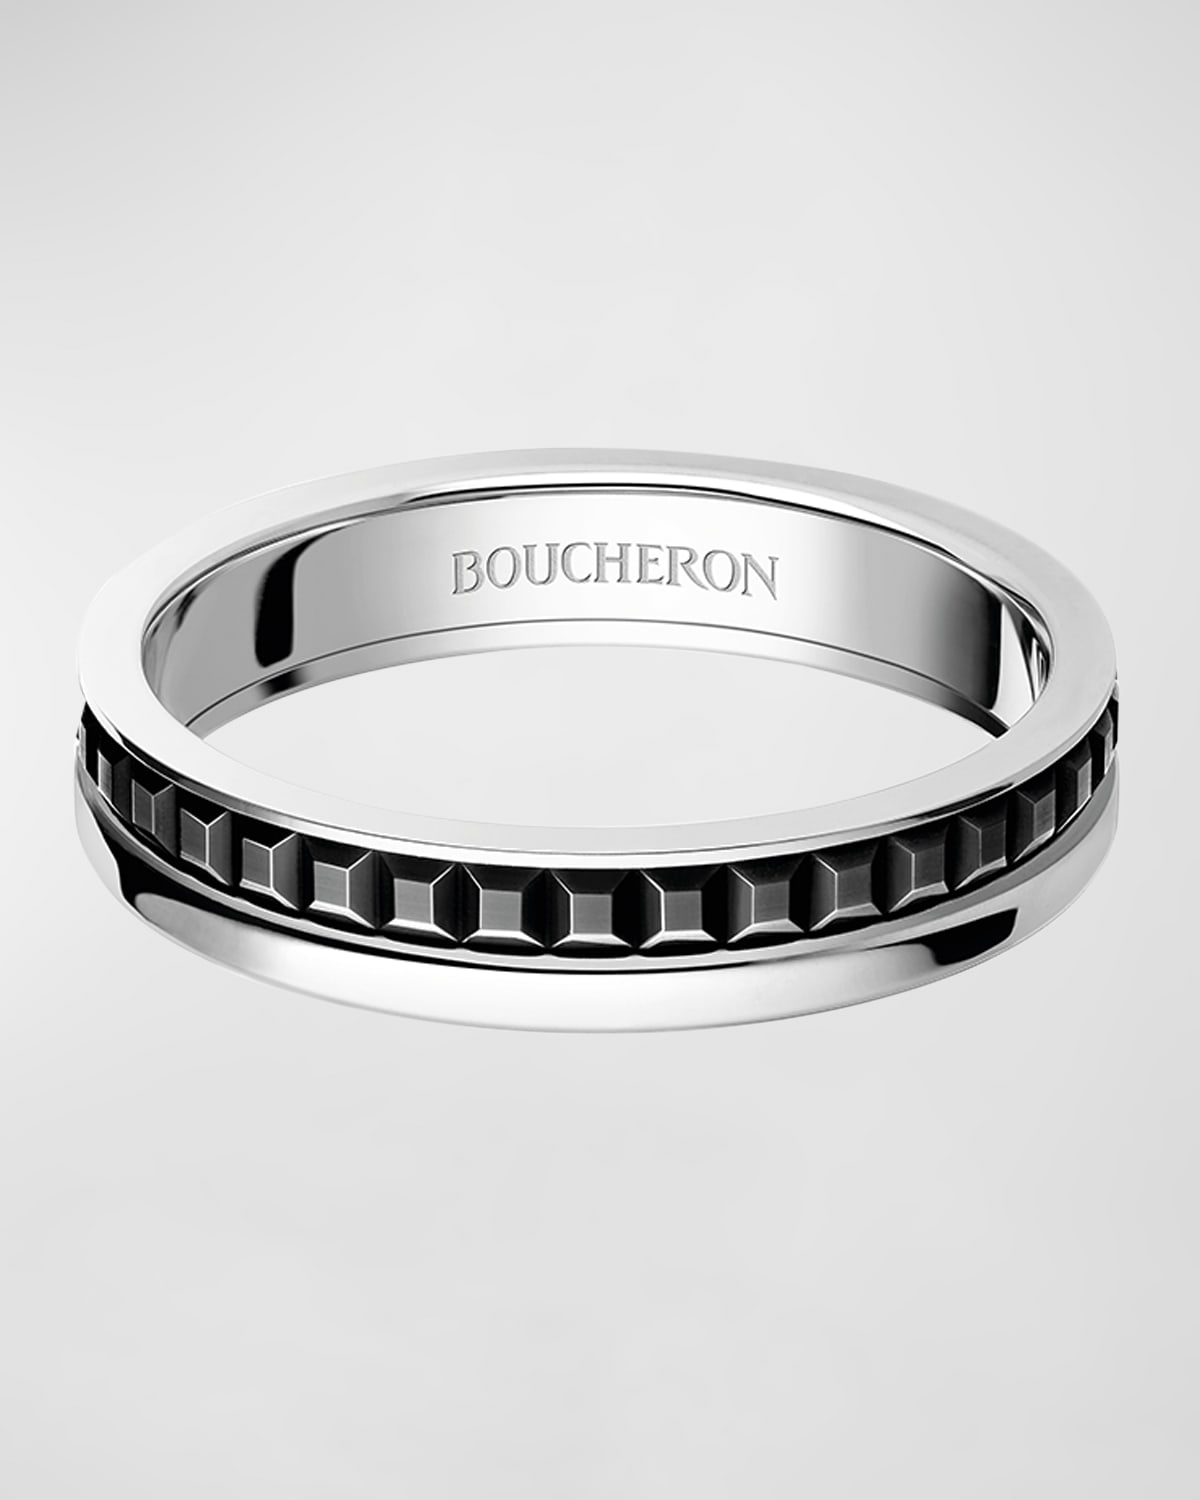 Boucheron Black and White Gold Quatre Follies Band Ring, Size 52